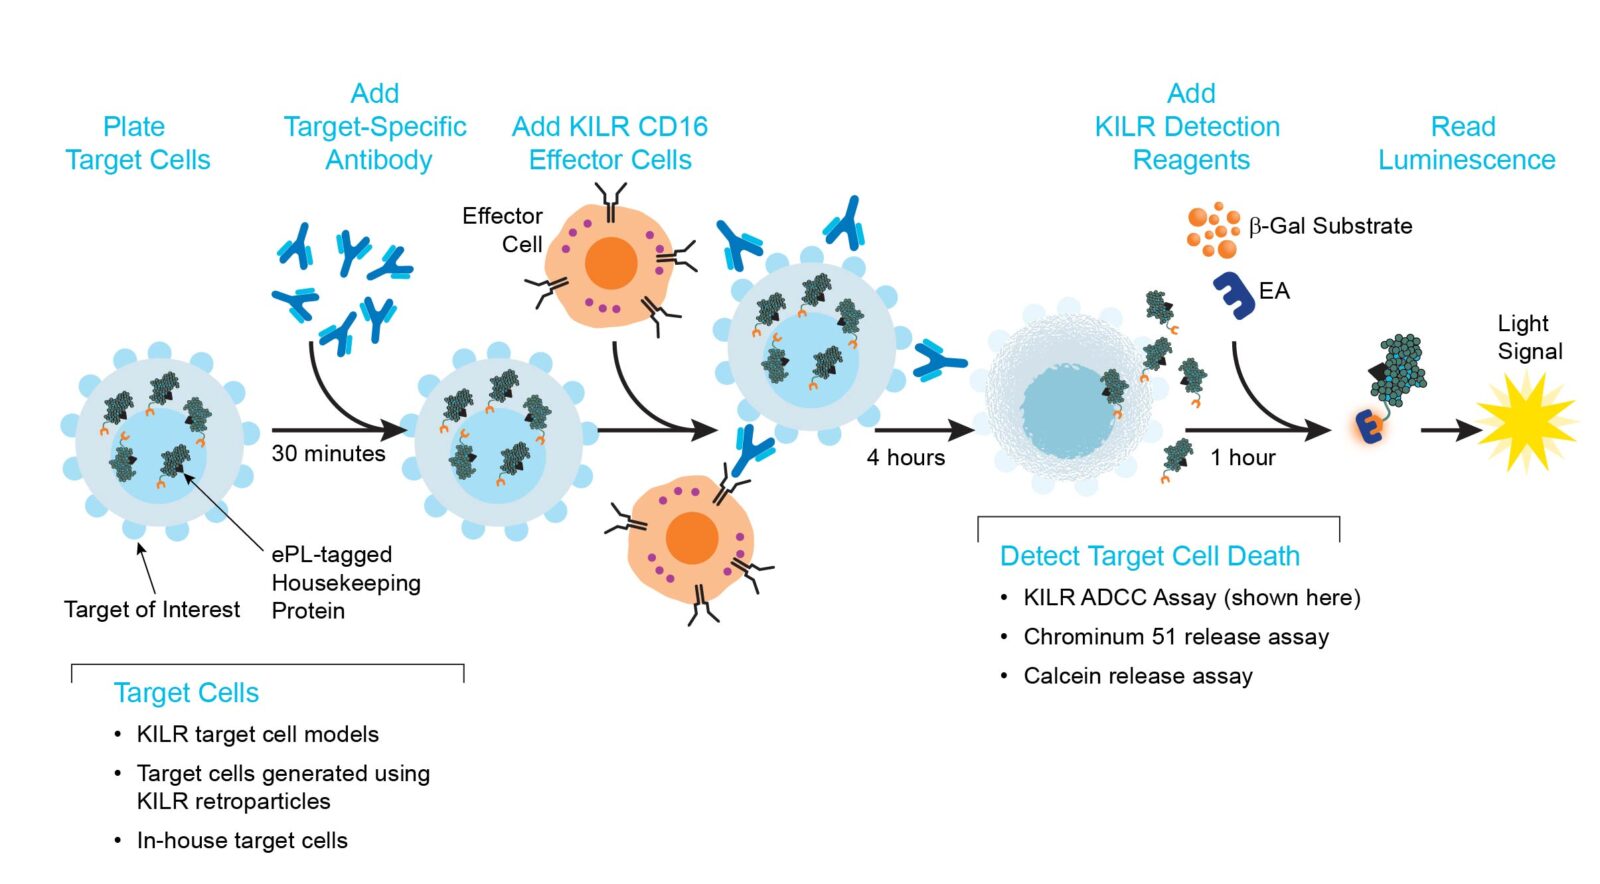 KILR ADCC Assay Principle using KILR CD16 Effector Cells